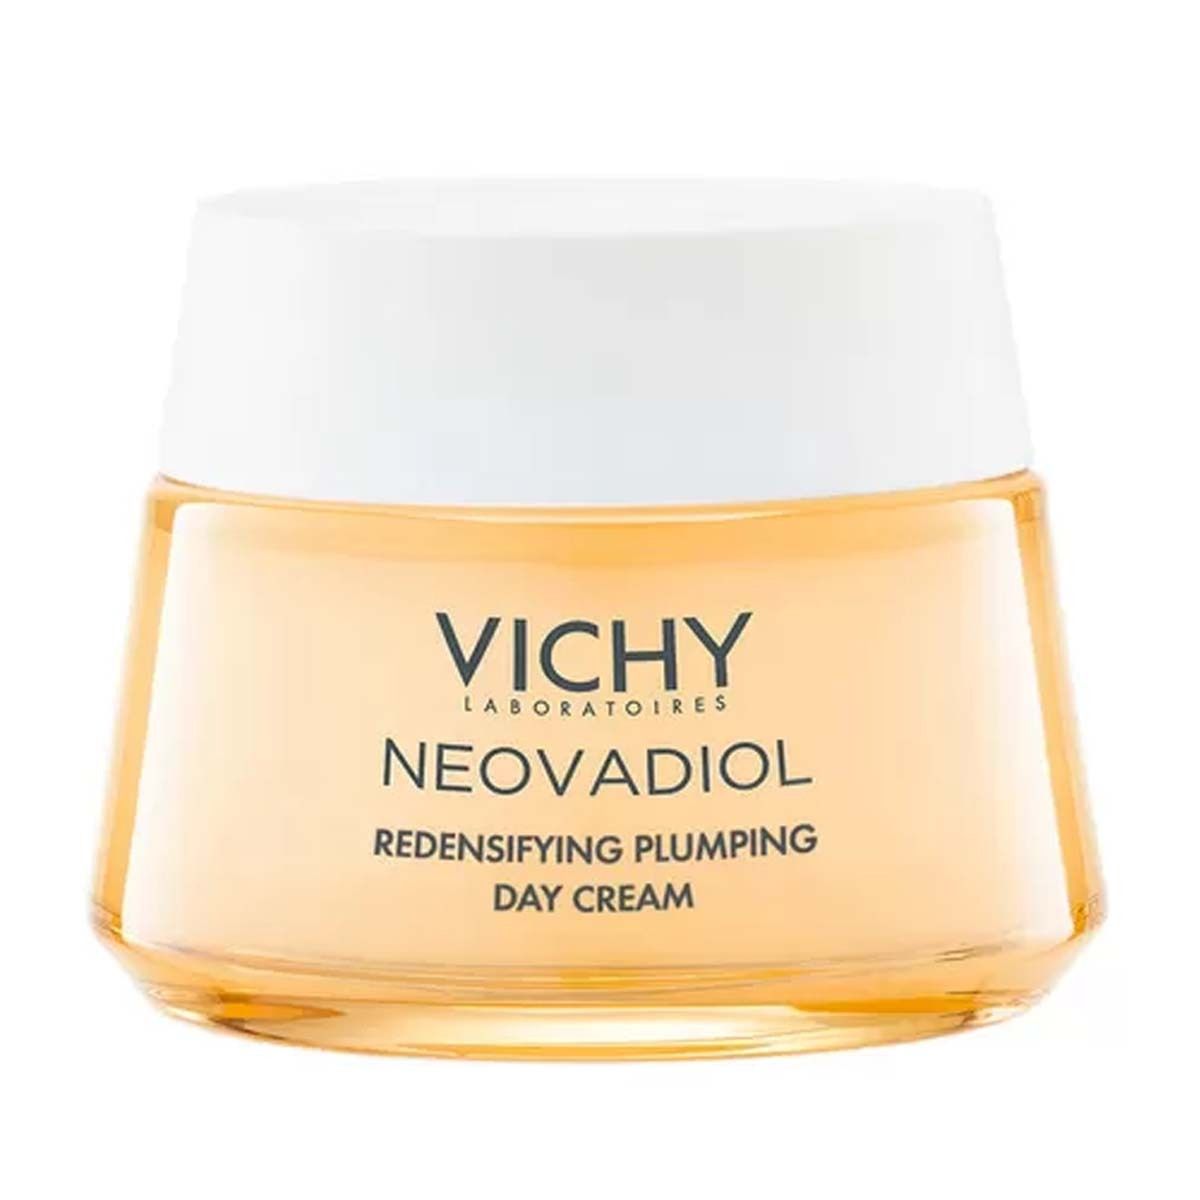 Køb Vichy Neovadiol Peri-Menopause Day Cream hos Med24.dk